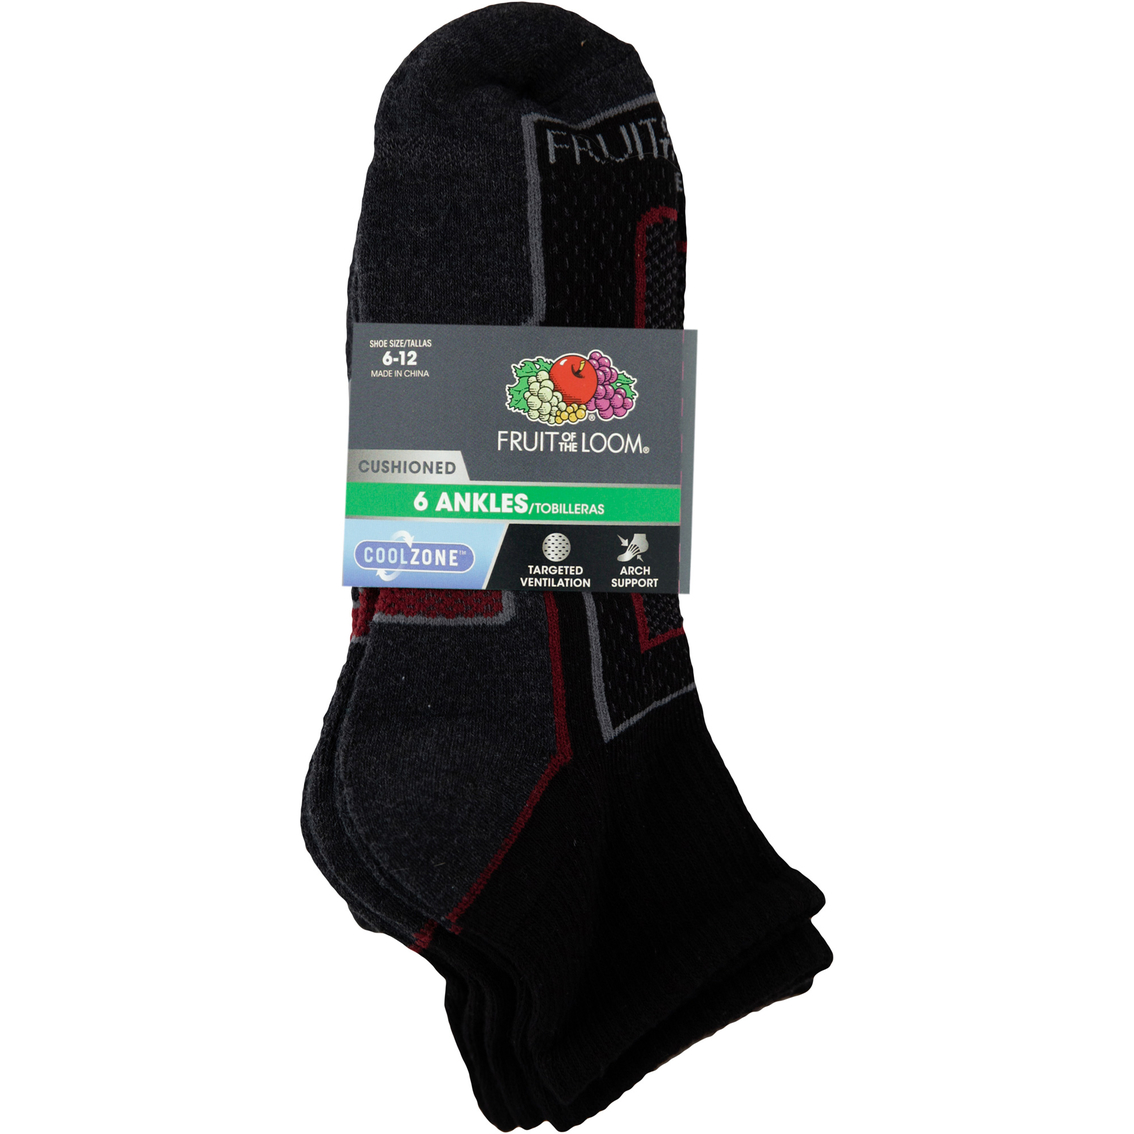 Fruit Of The Loom Cool Zone Ankle Socks 6 Pk. | Socks | Clothing ...